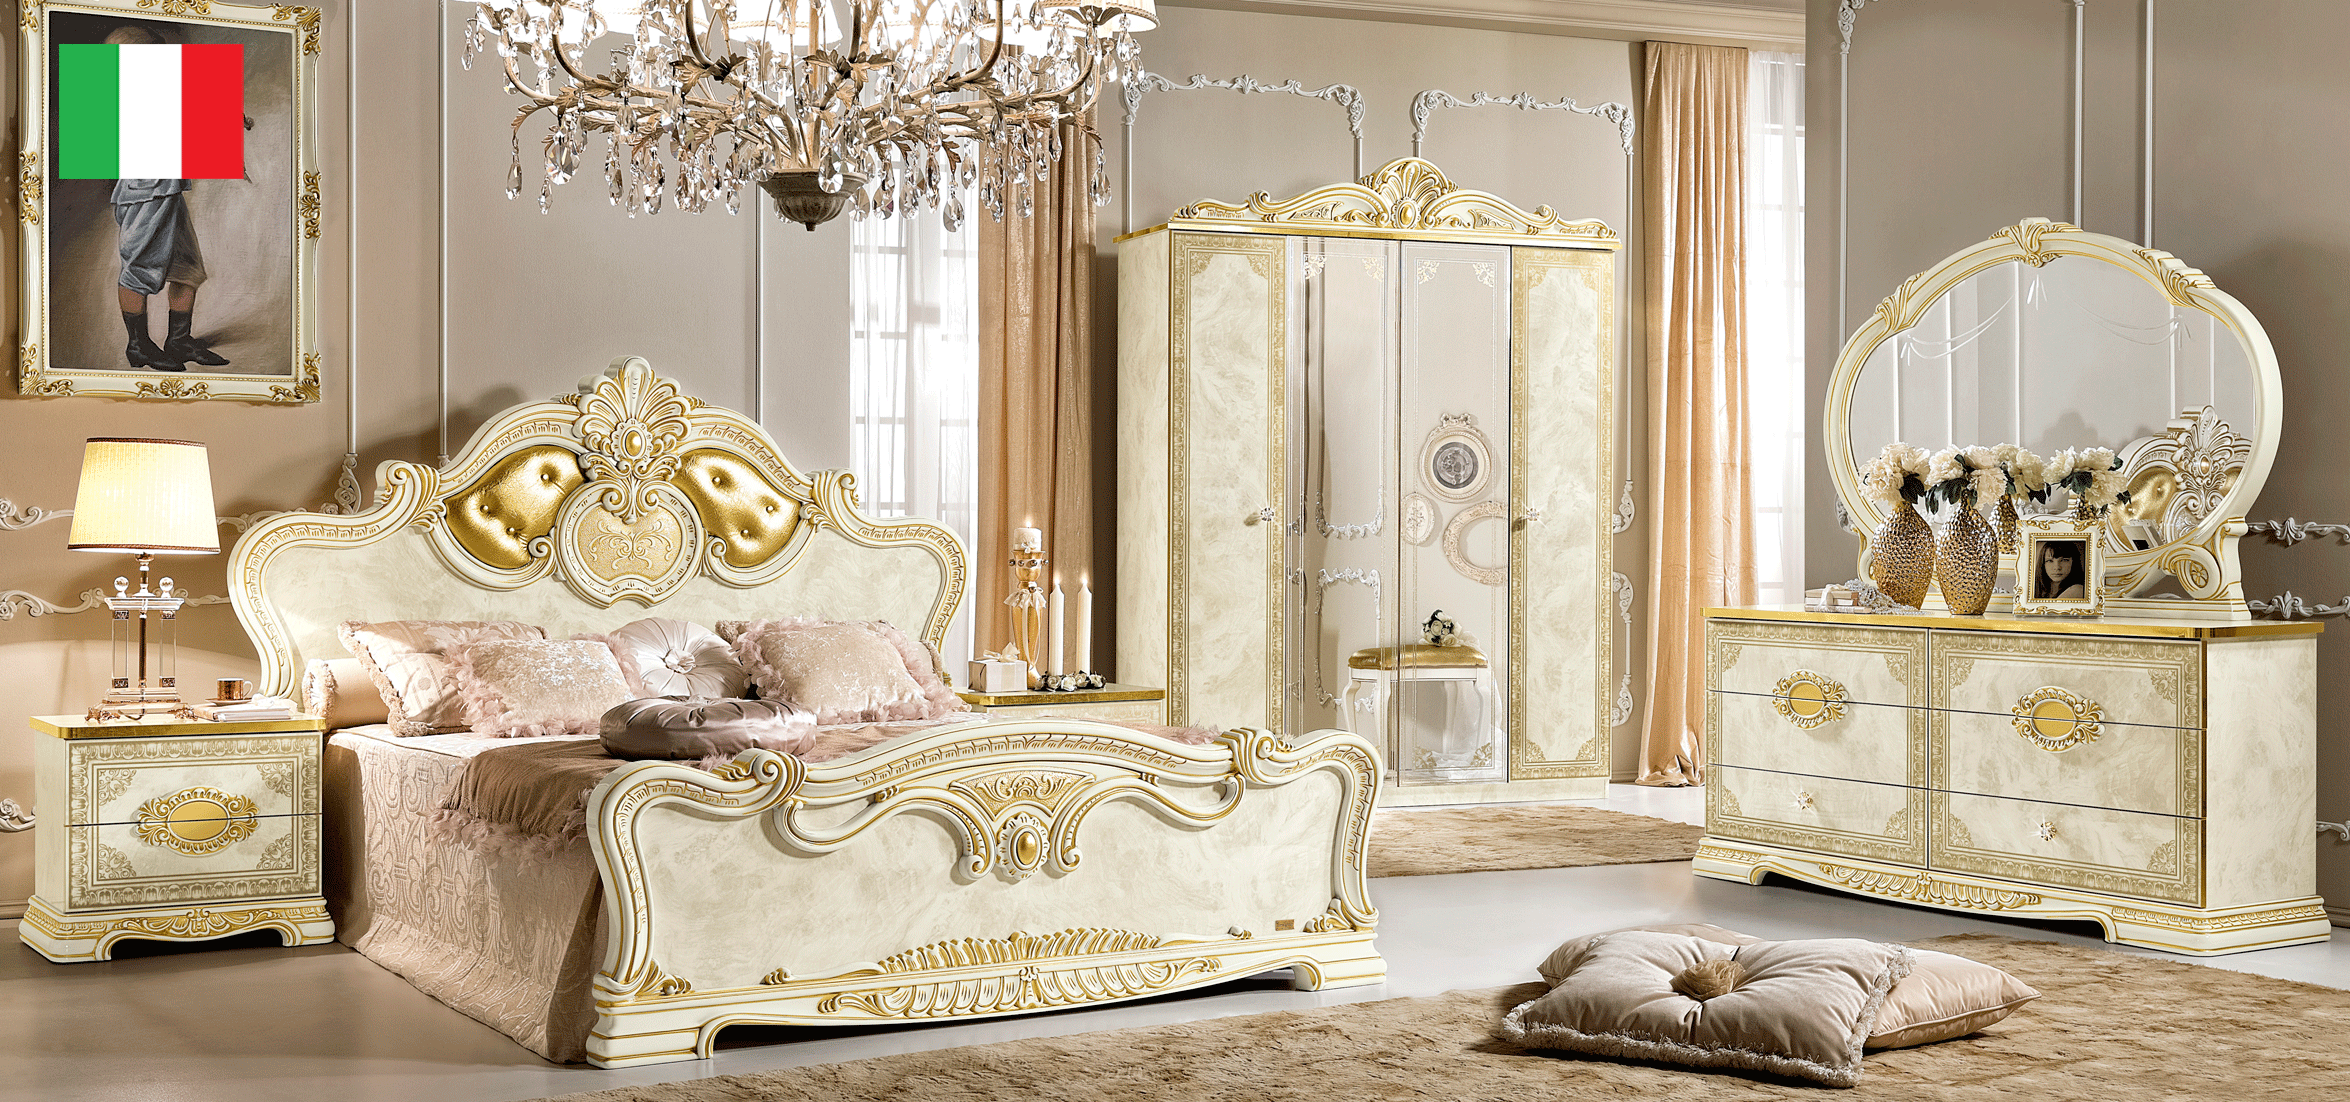 Bedroom Furniture Mirrors Leonardo Bedroom, Camelgroup Italy